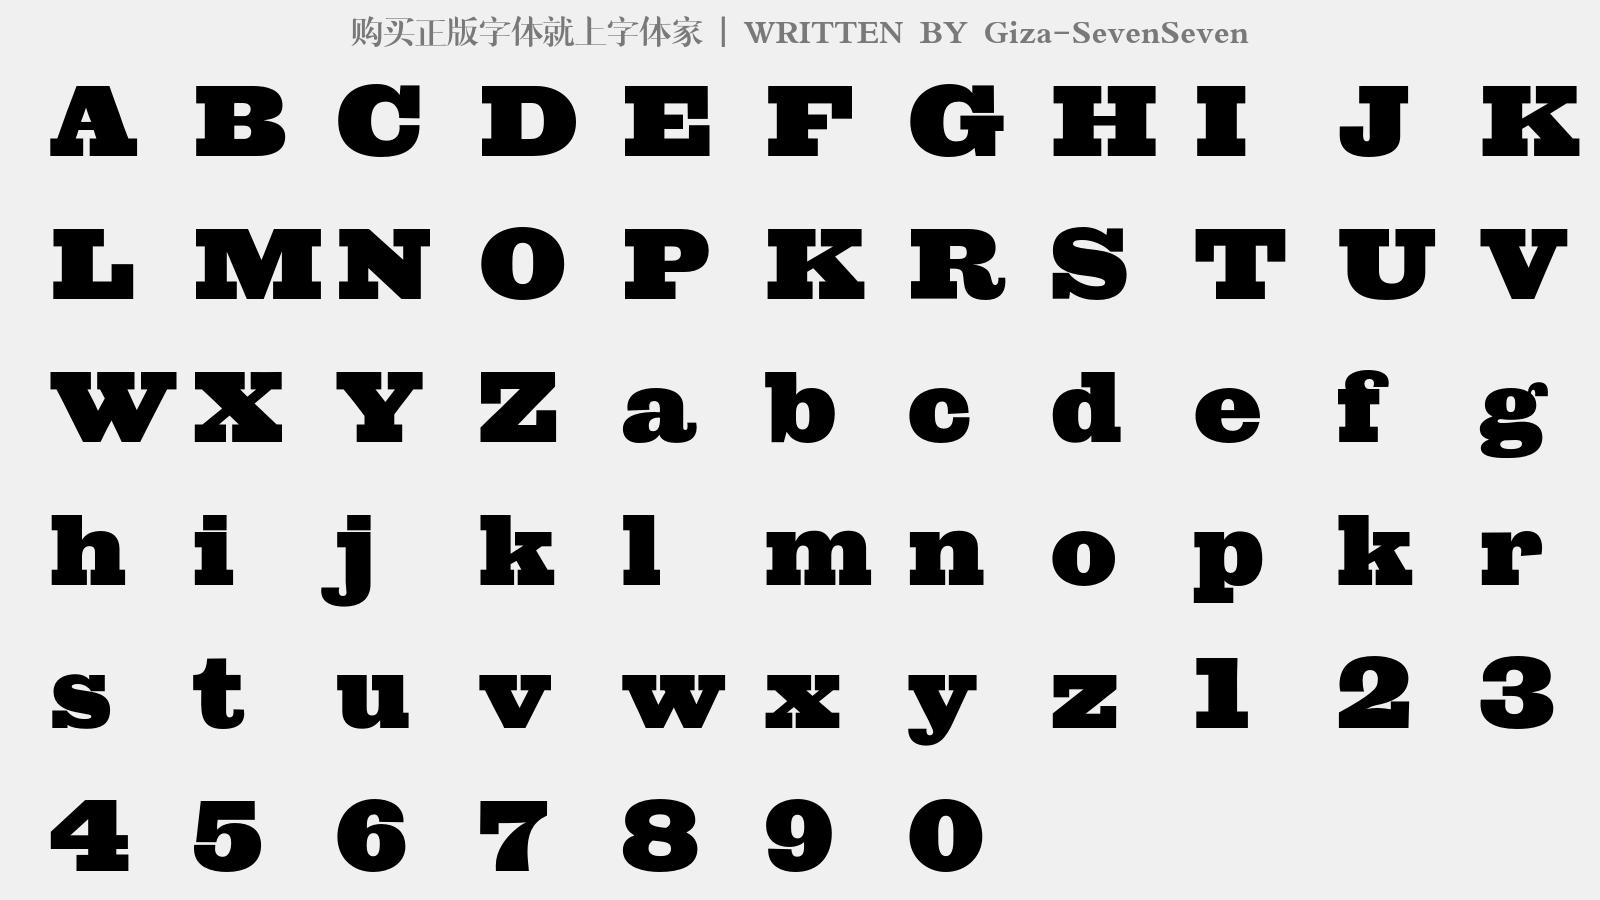 giza-sevenseven 该字体是一款个性独特的英文字体,非常适合创意类的